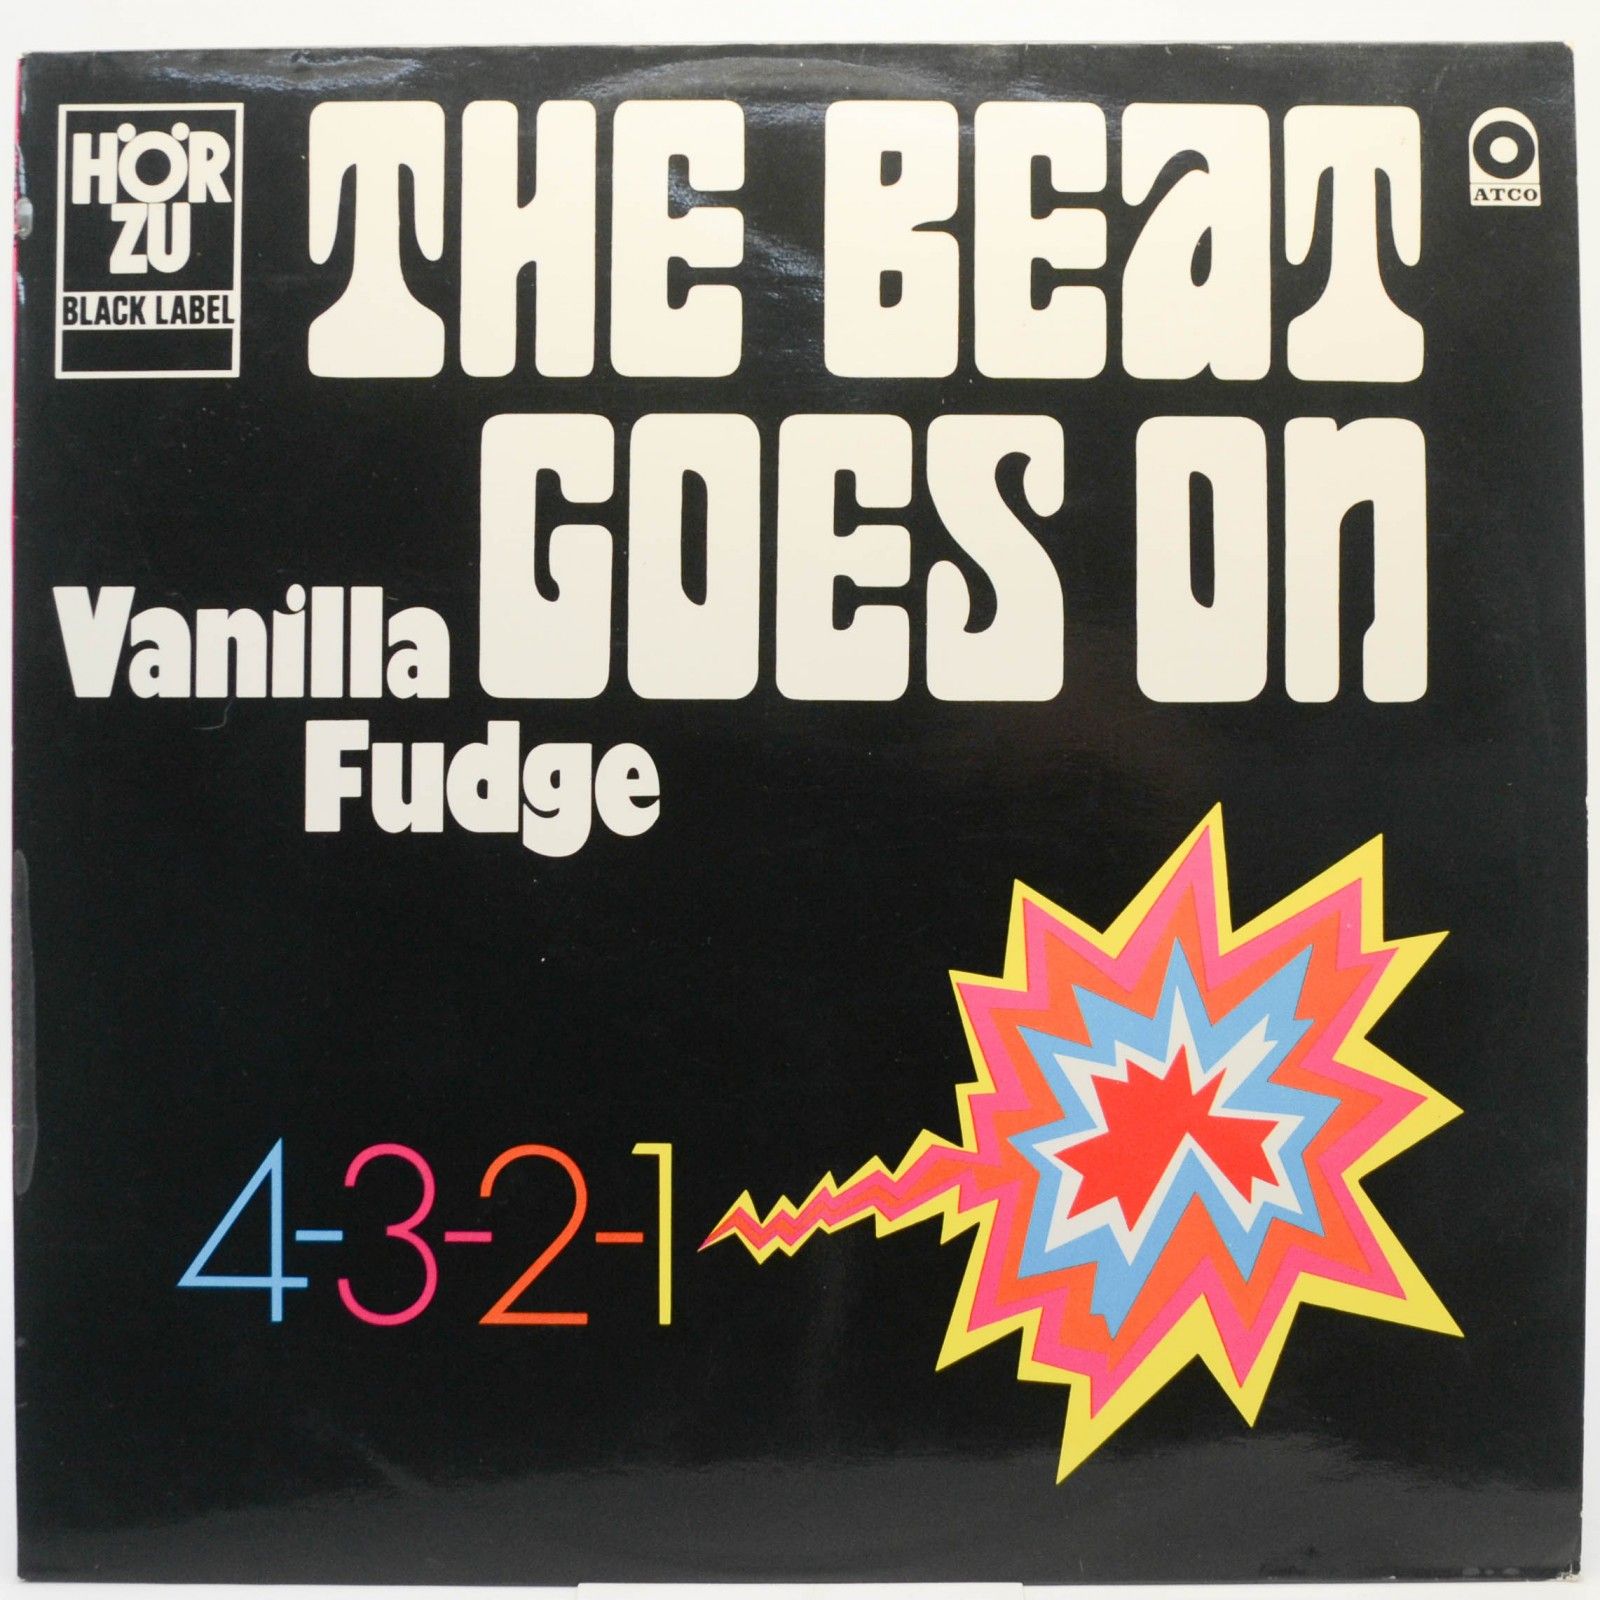 Vanilla Fudge — The Beat Goes On, 1968